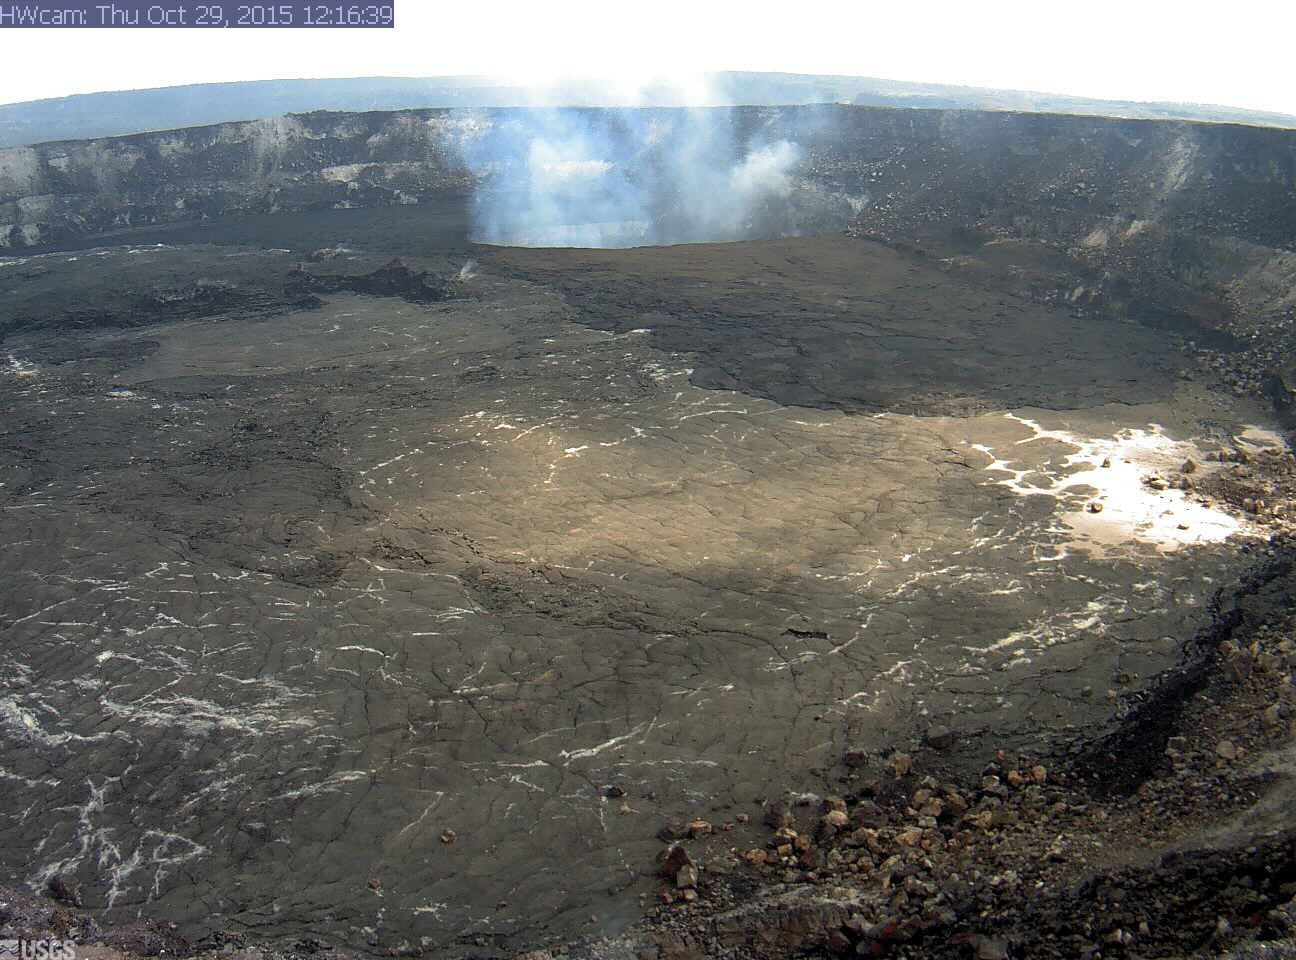 Hawaii volcano webcams live streaming volcano cameras Hawaii volcano news by Floodwarn - FREE ...